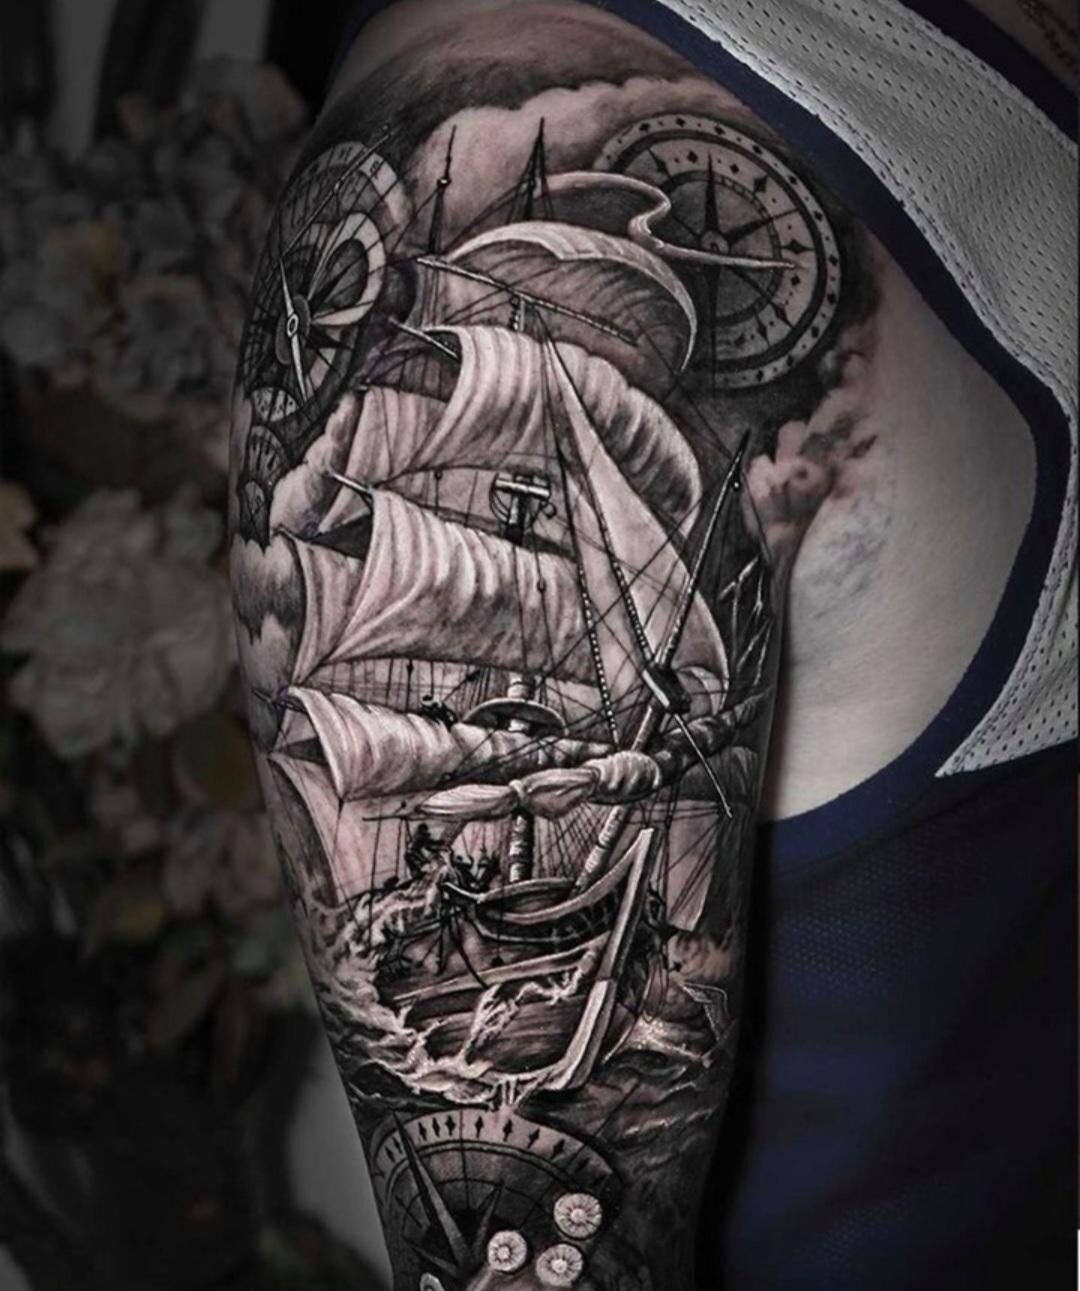 Ship half sleeve done by @joseneedles at Arlia tattoo in